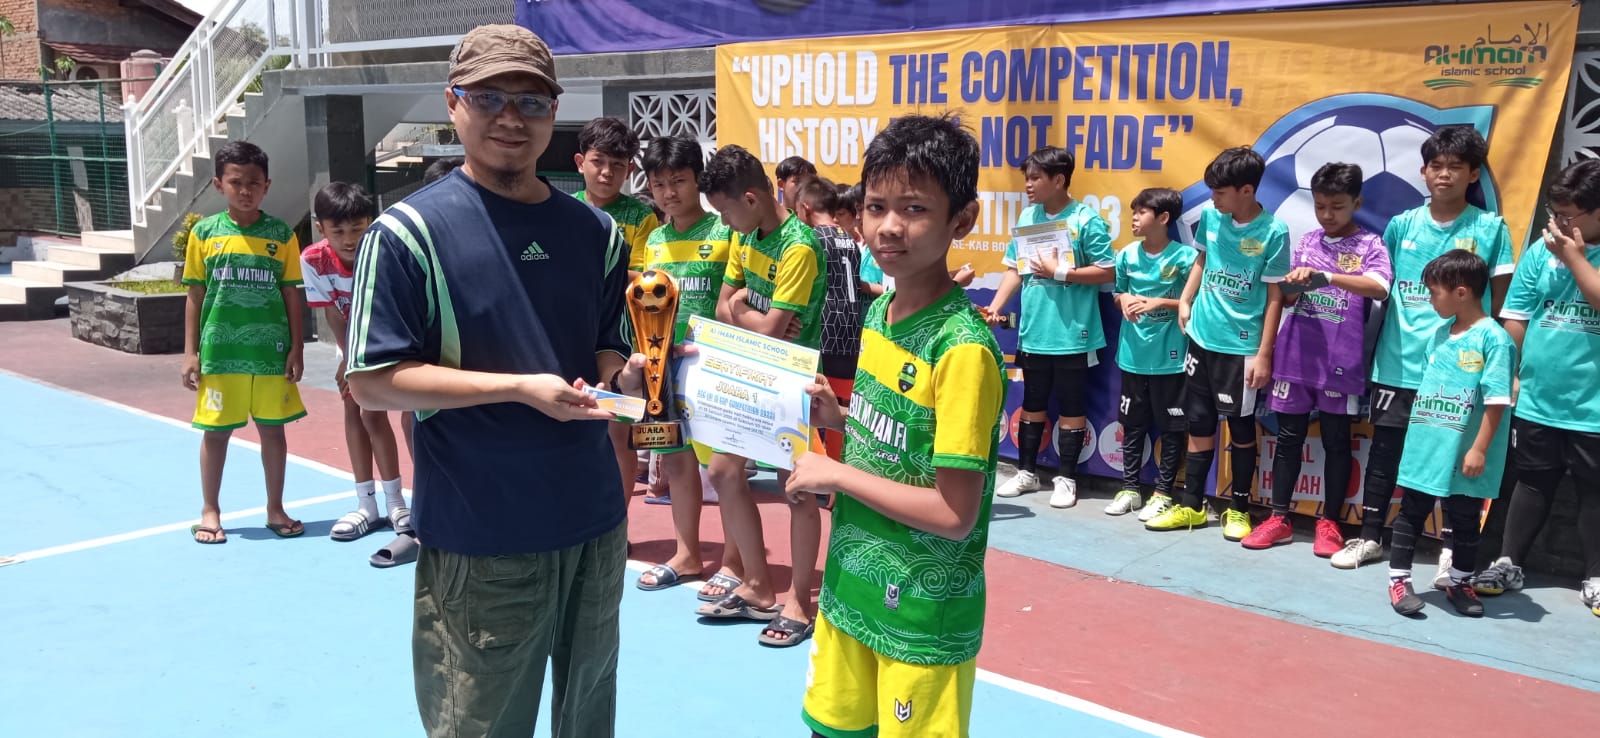 SD MUDA Juara 1 Lomba Turnamen Futsal ACC (AI IS CUP COMPETITION 23)